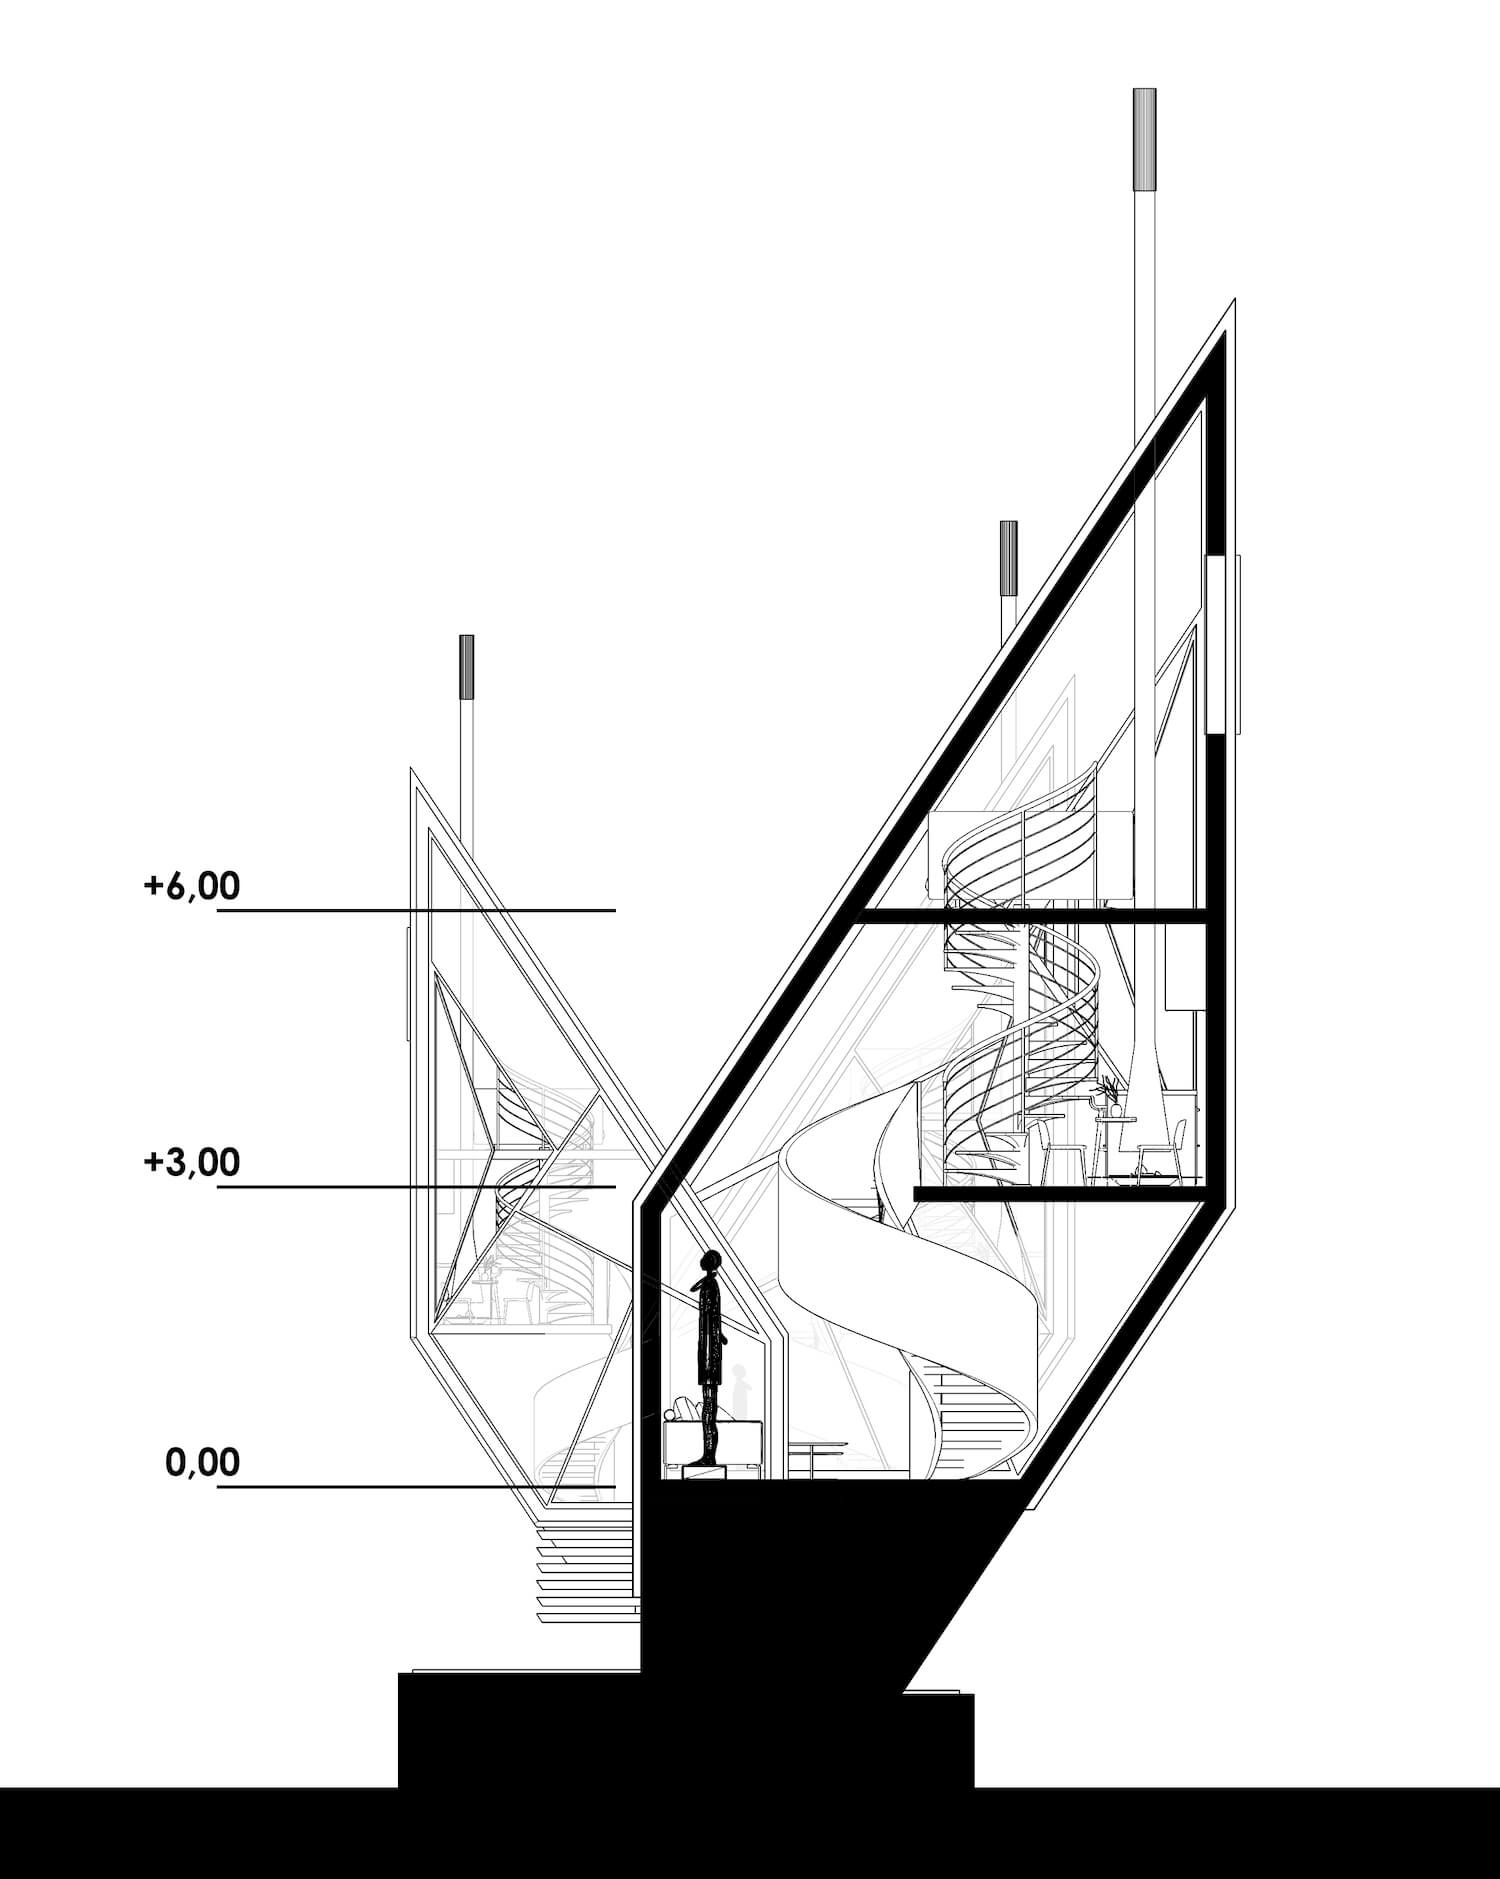 module modern concept house plan